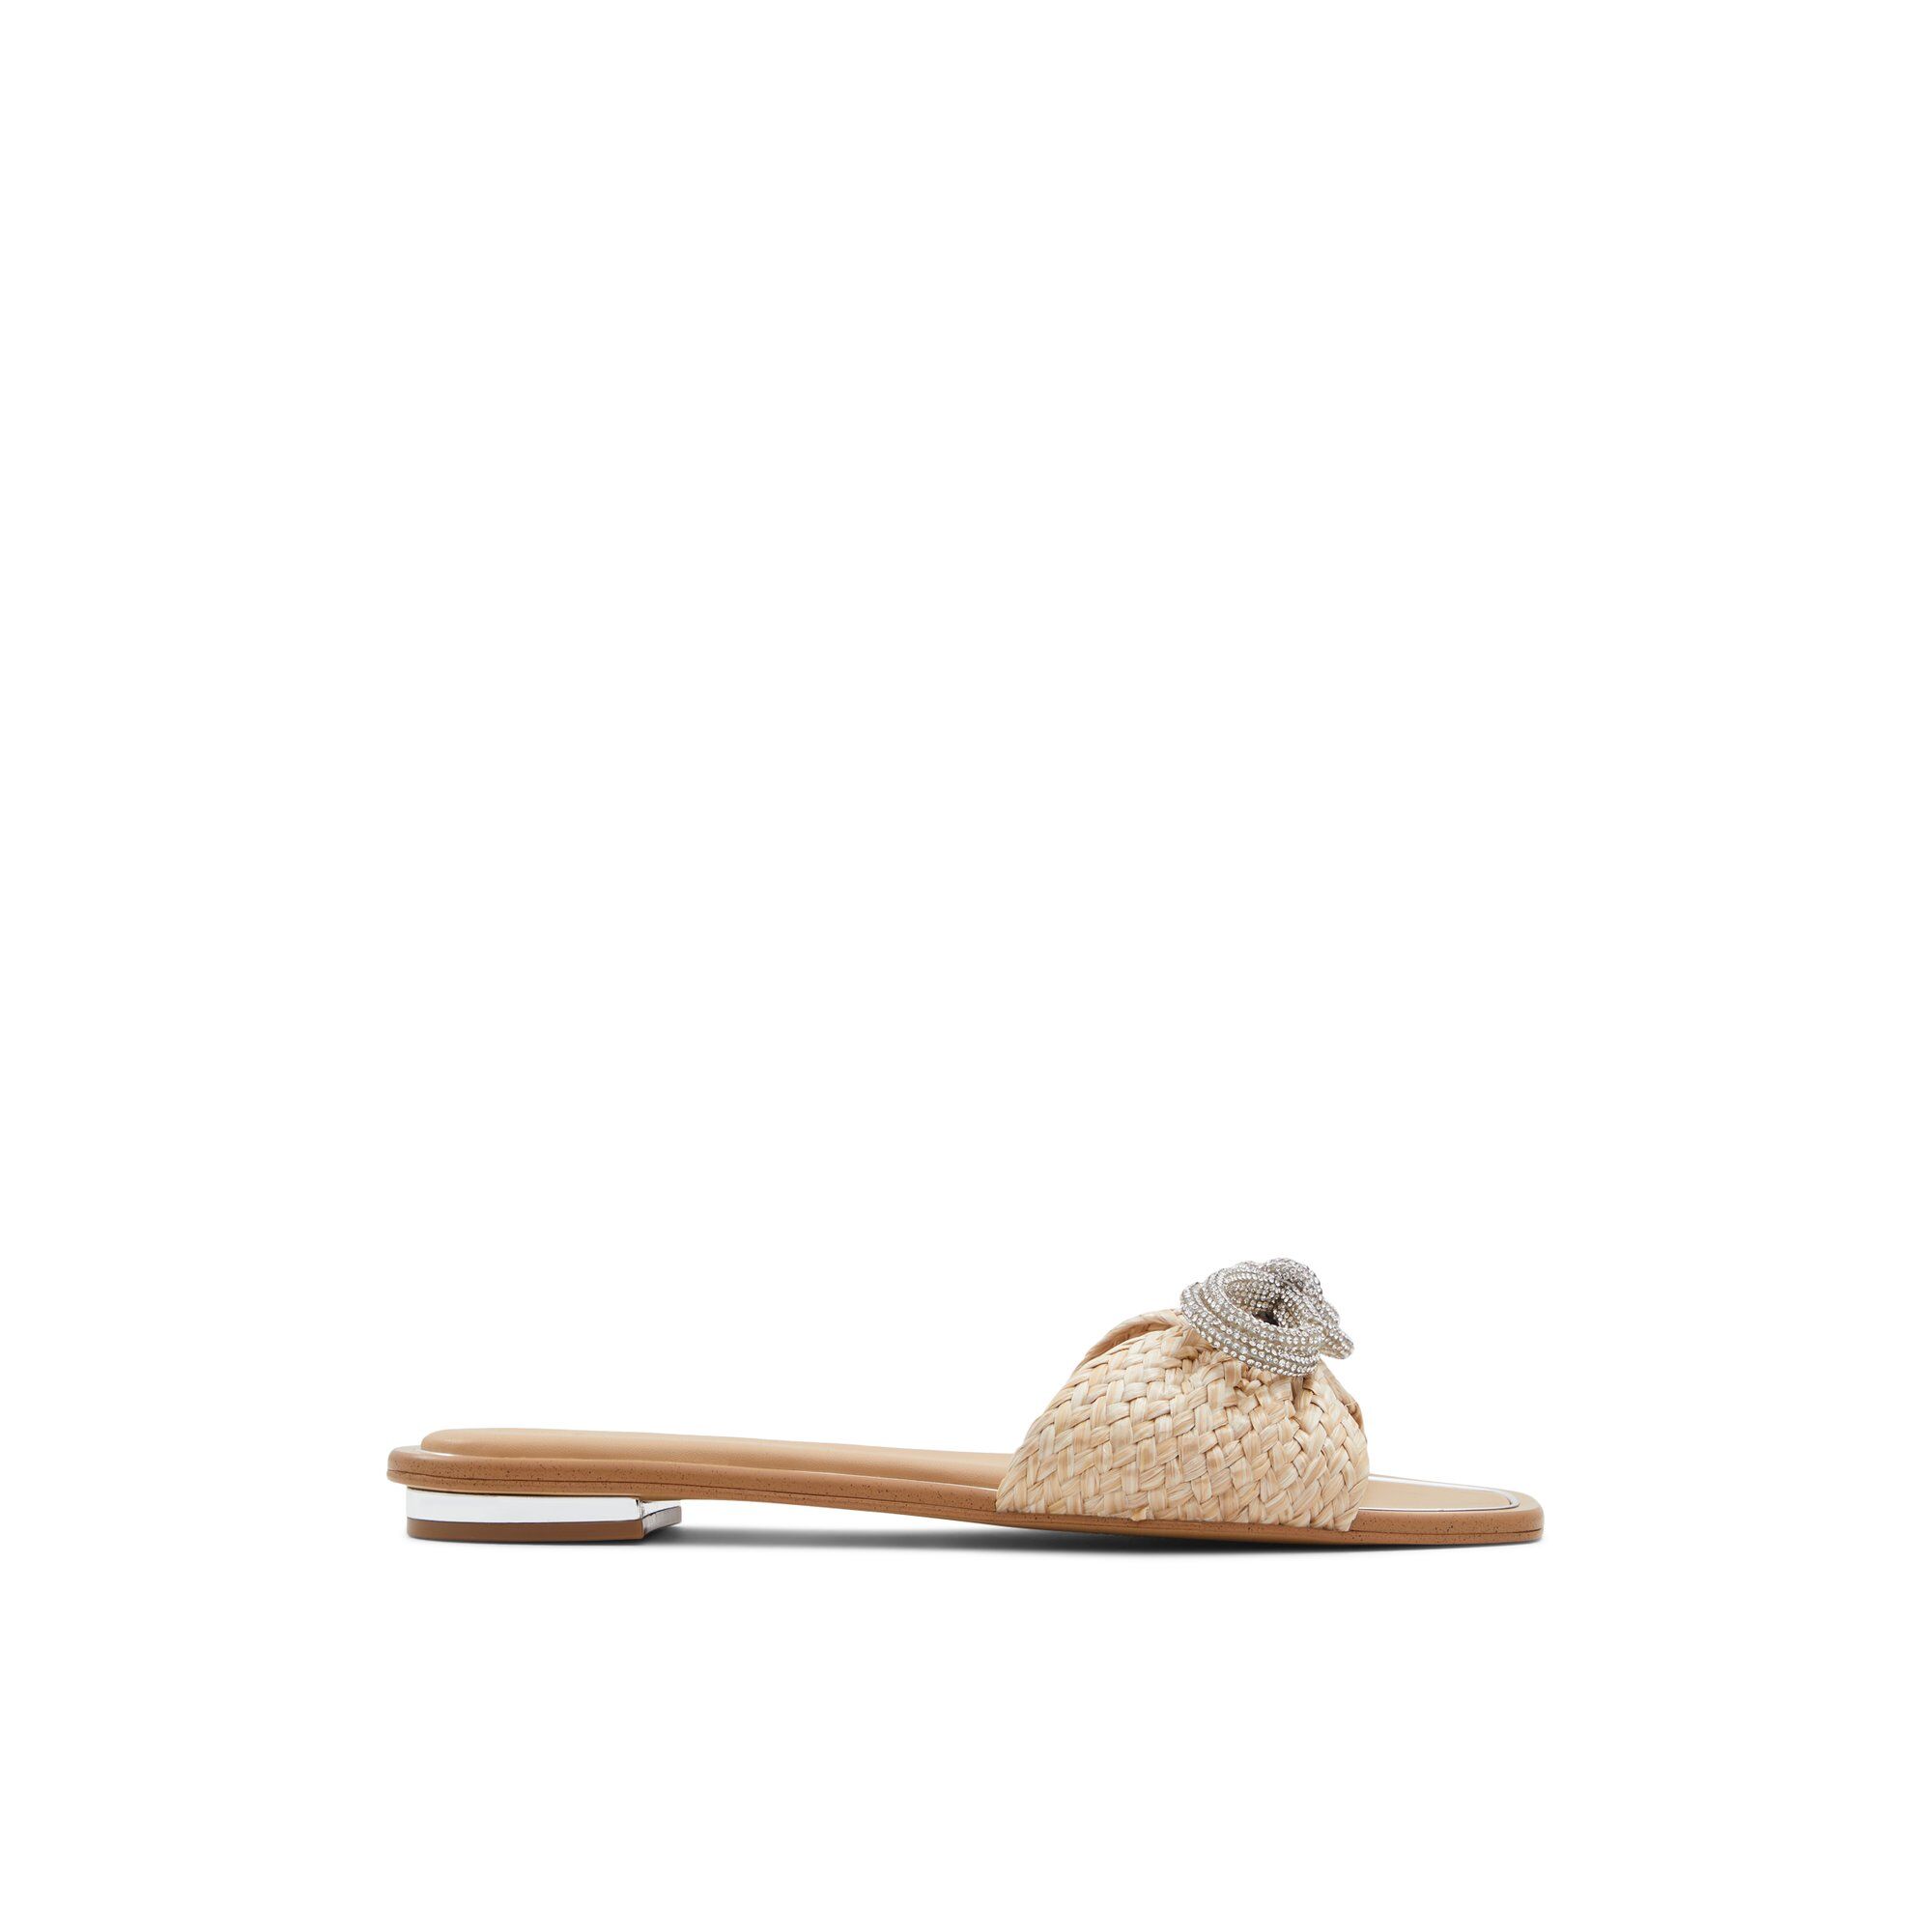 ALDO Acirarwen - Women's Sandal - Beige, Size 10